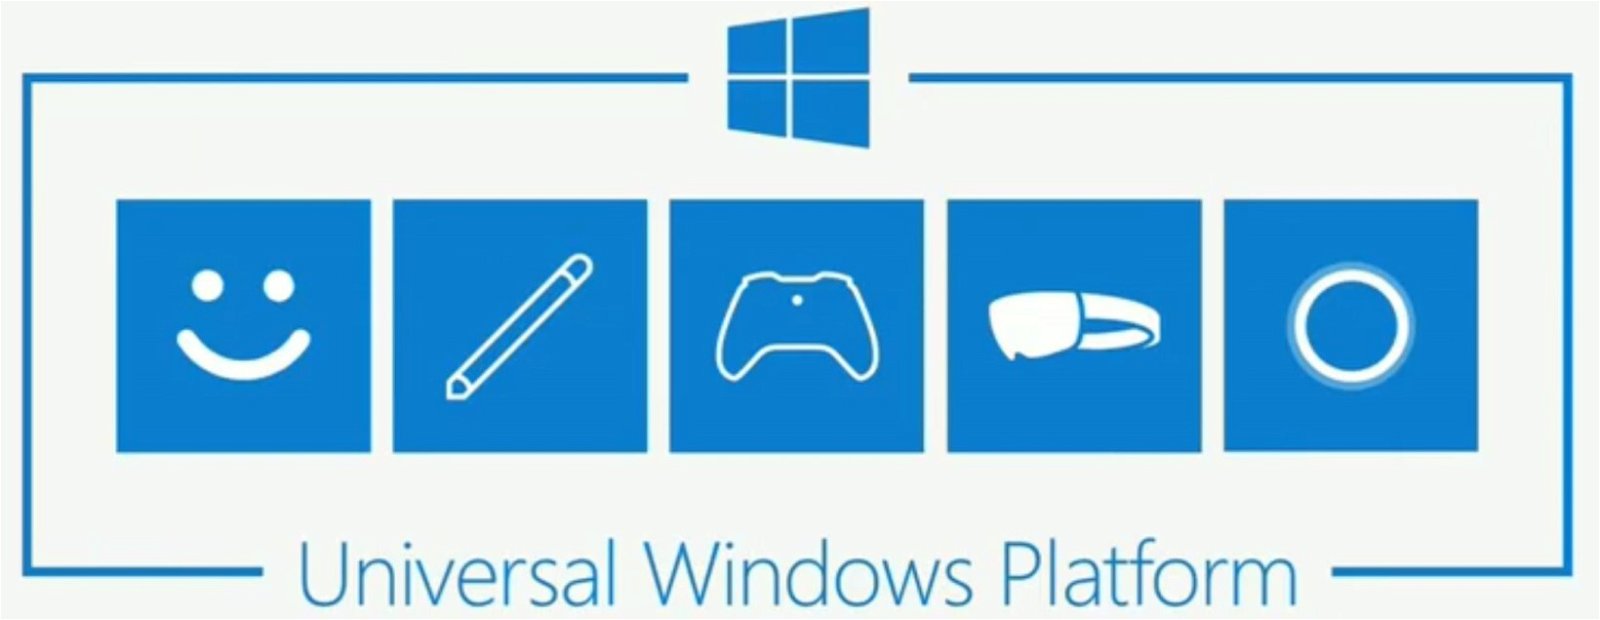 Gears Of War Developer Tells Games Industry To Oppose Microsoft